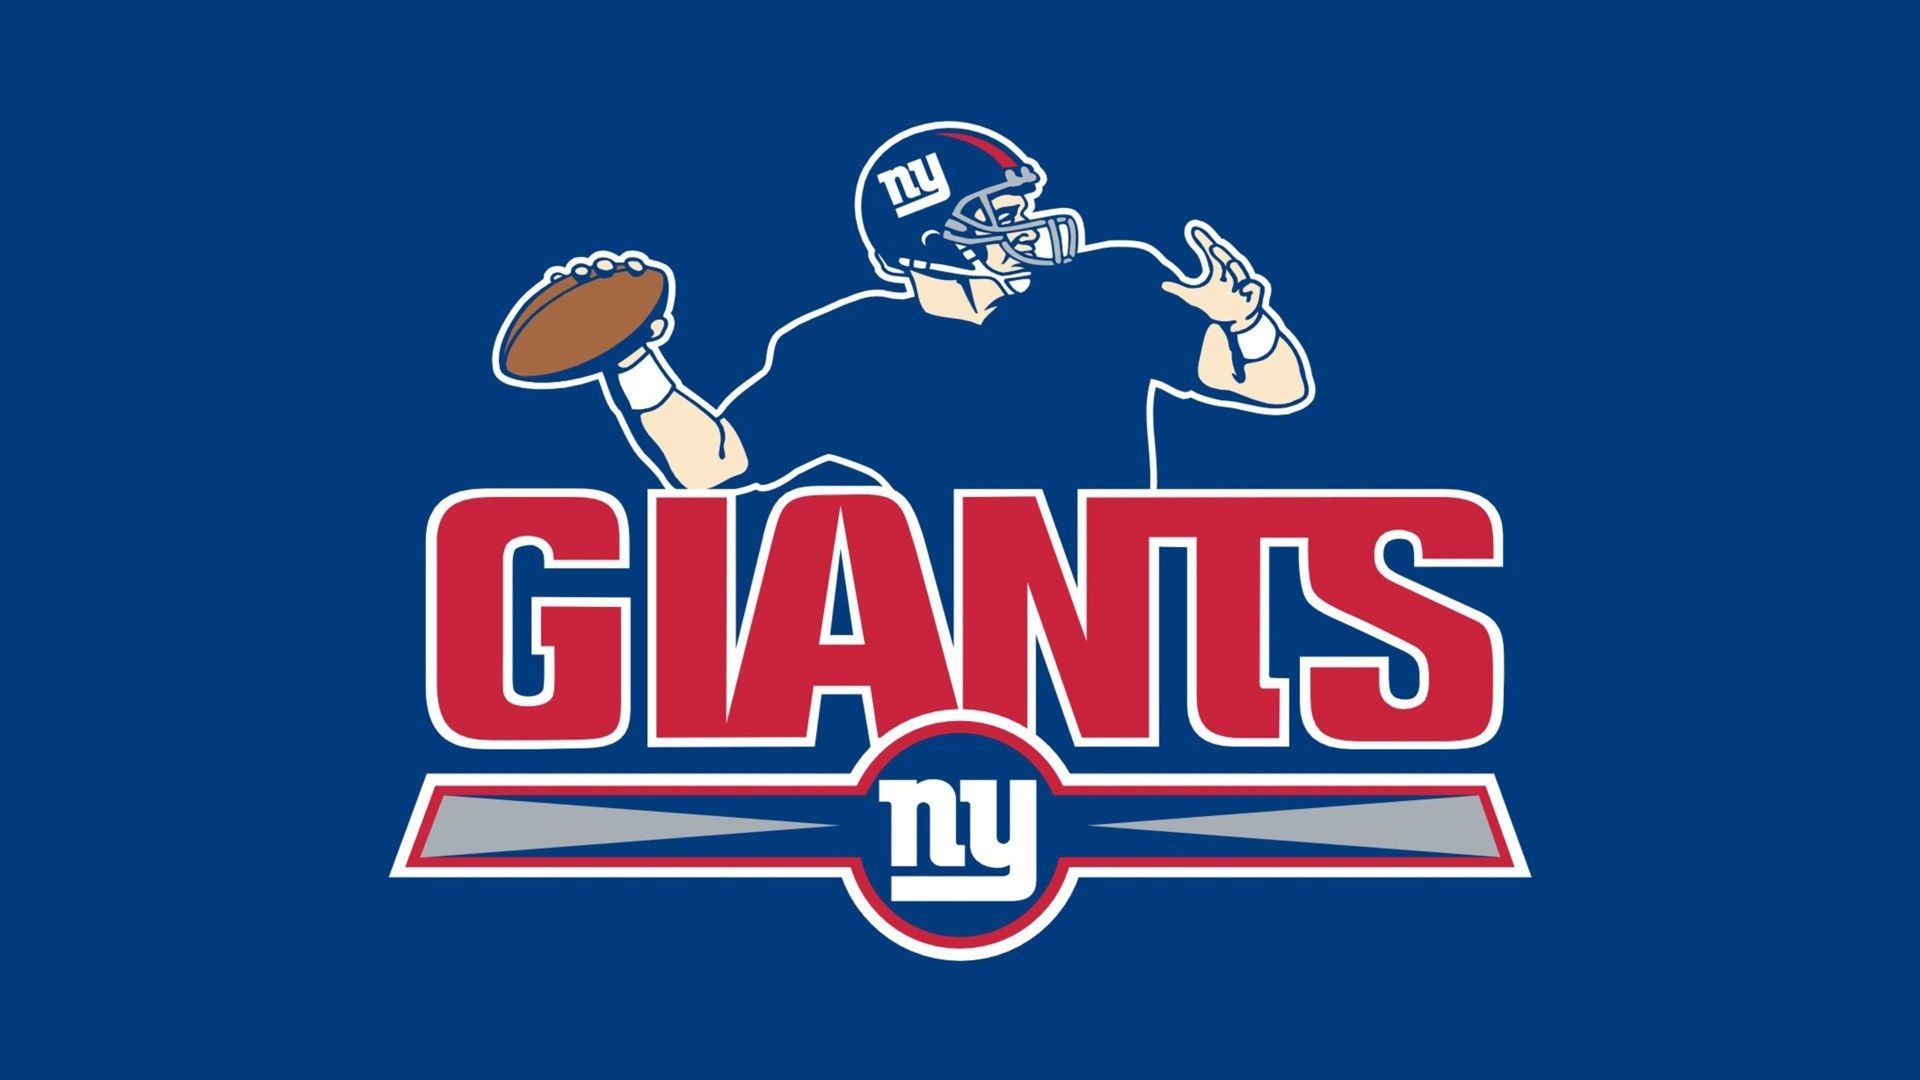 1920x1080 New York Giants Wallpaper For Mac Backgrounds 2022 NFL Football Wallpapers | New york giants, Nfl football wallpaper, Giants